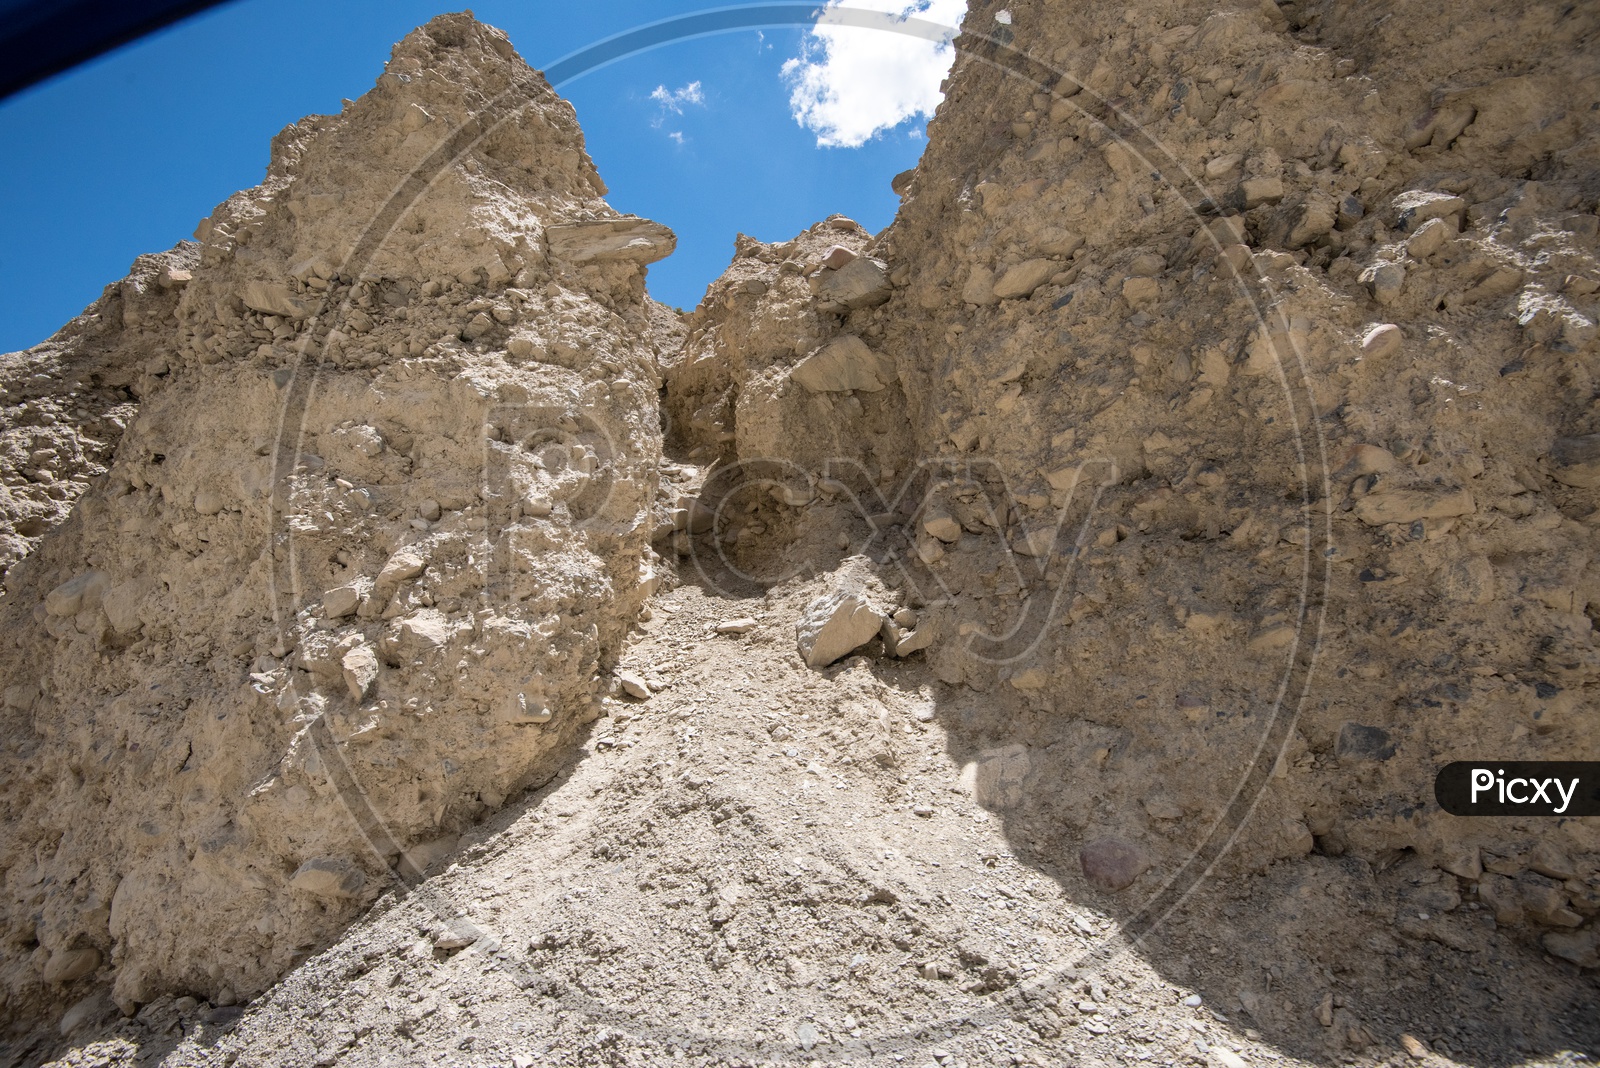 Terrain Badlands With Sedimentary Soils in Leh  Valleys